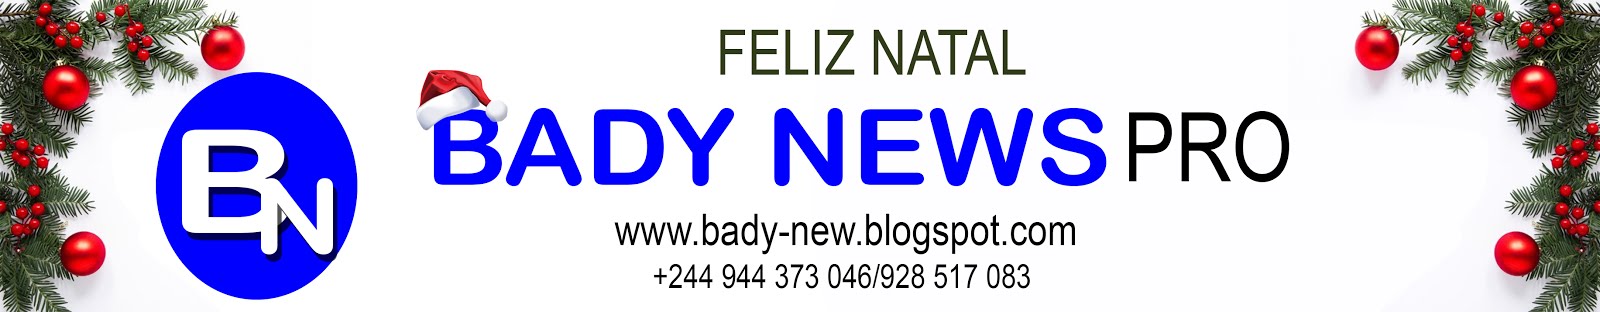 Bady Newspro - Download Mp3